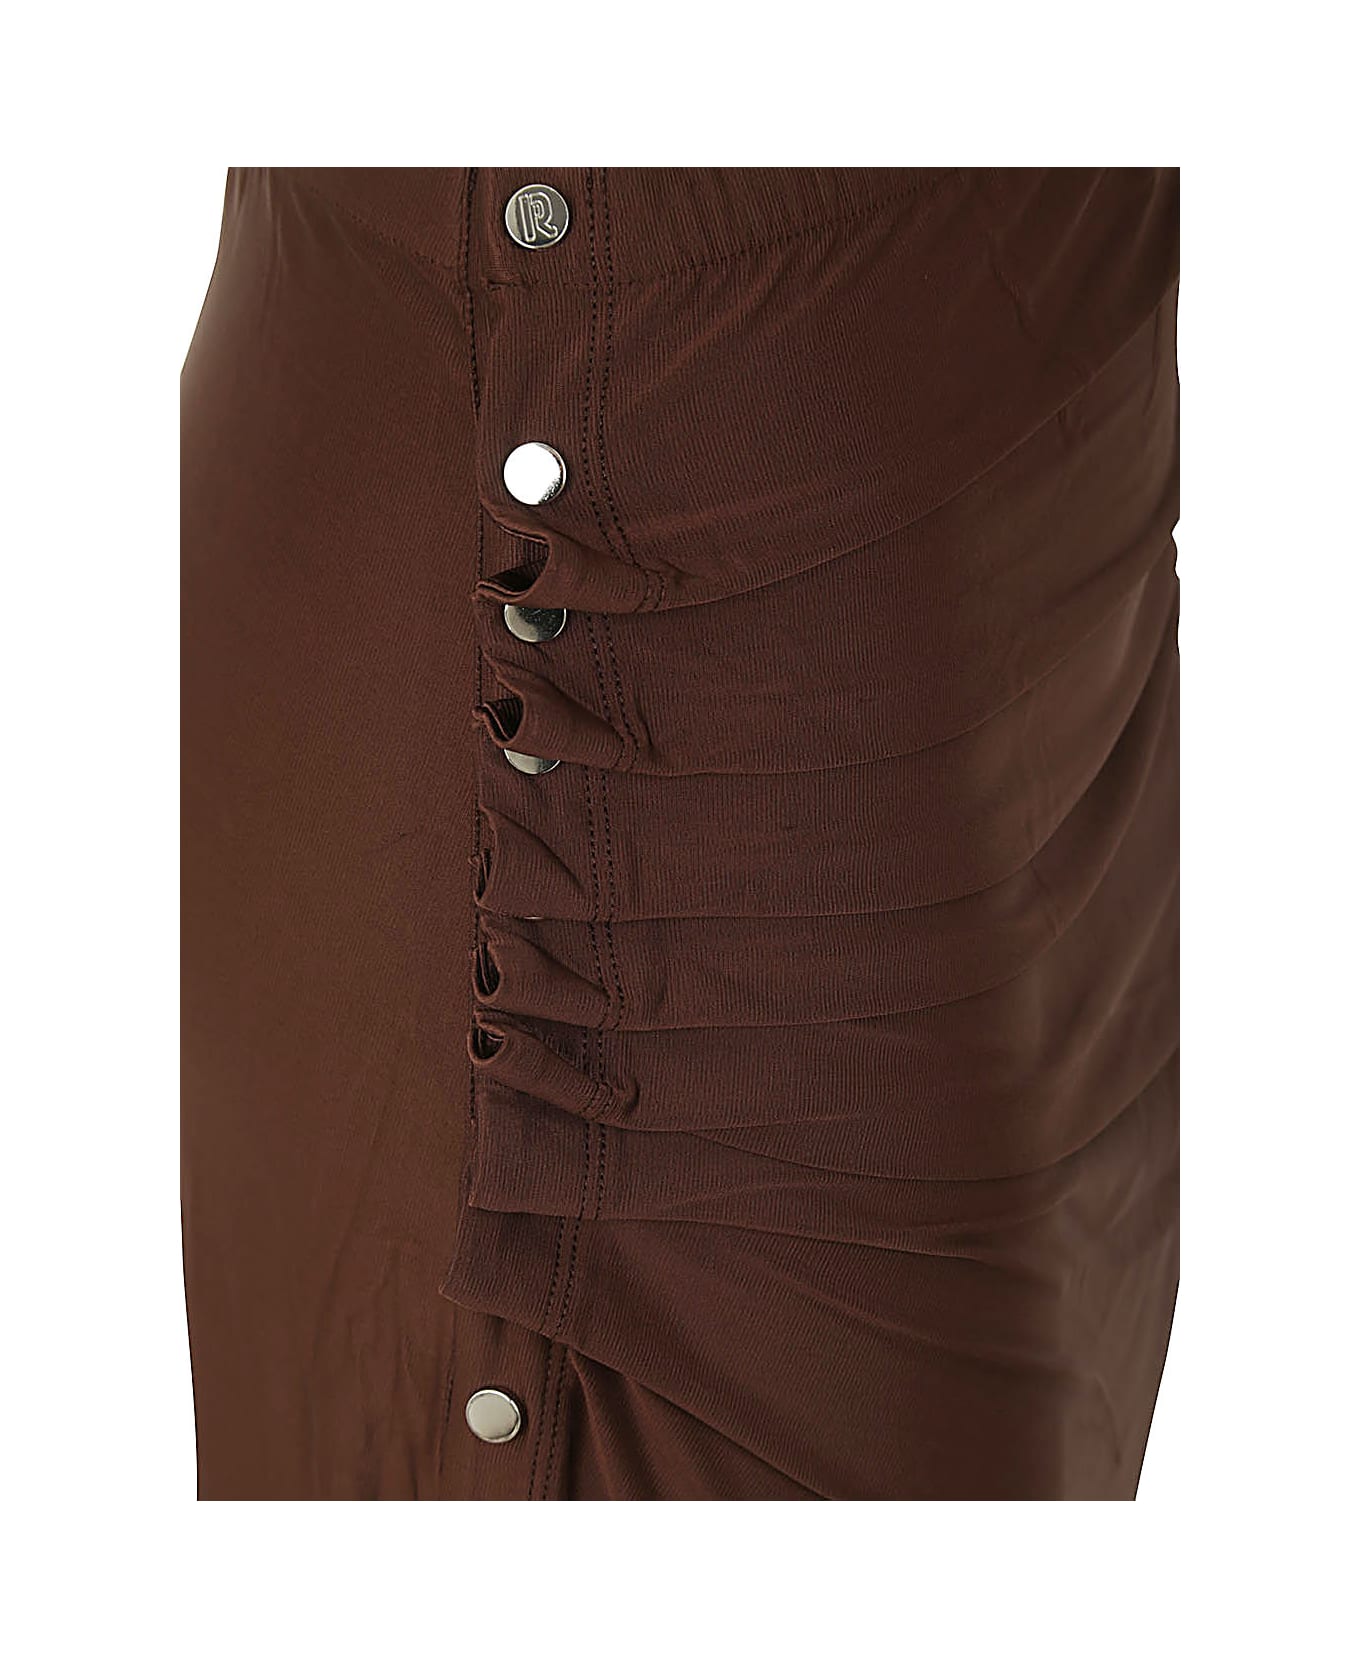 Paco Rabanne Viscose Jersey Skirt - Chocolat